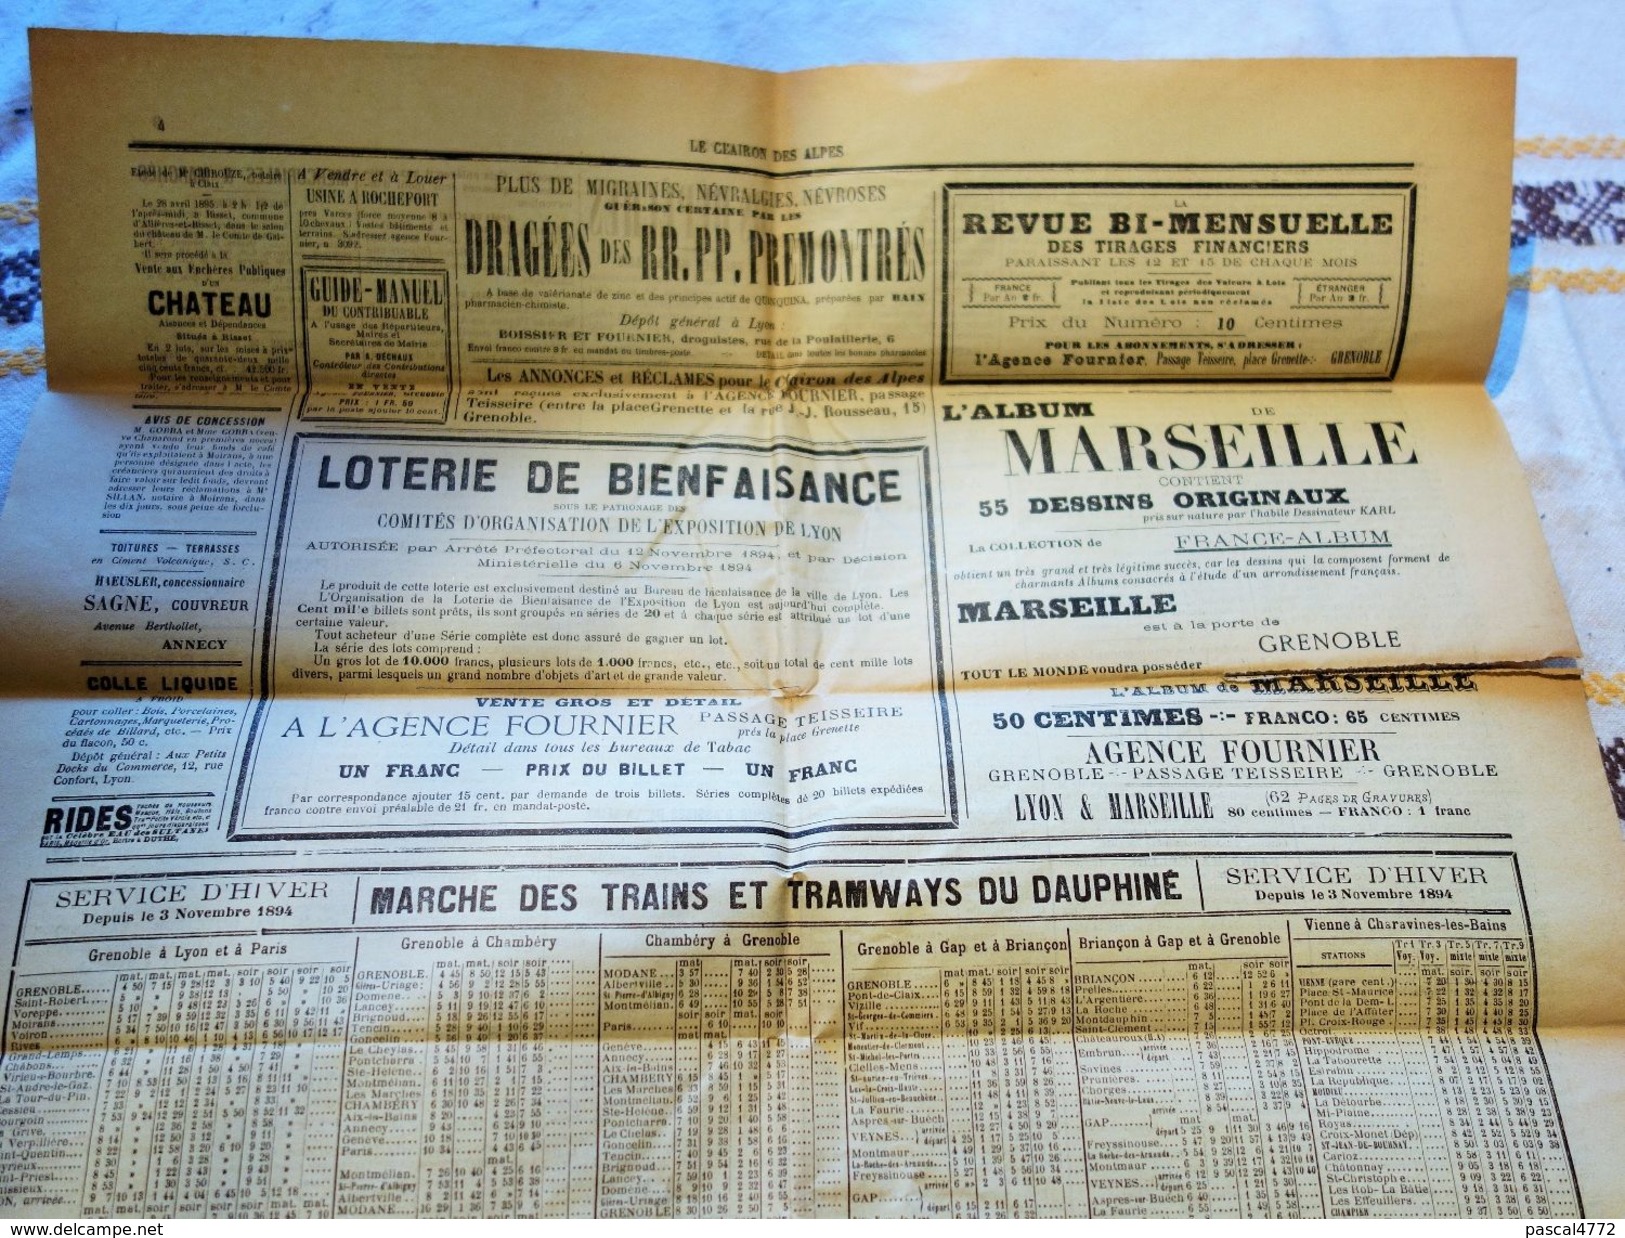 ANCIEN JOURNAL LE CLAIRON DES ALPES 1895 REDACTEUR  FREDYRIC BREYNAT GRENOBLE N° 91 - 1850 - 1899